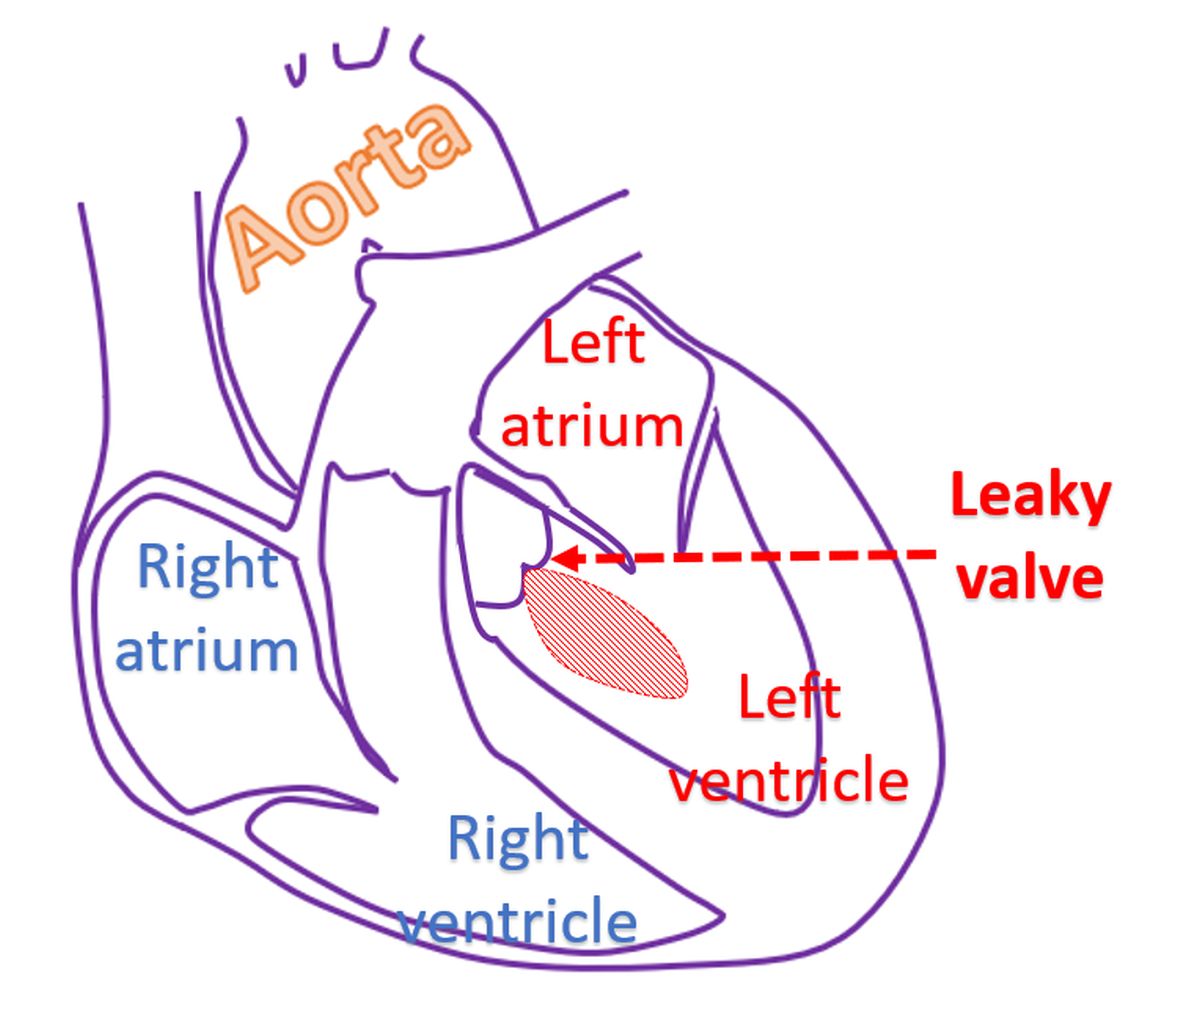 Leaky aortic valve